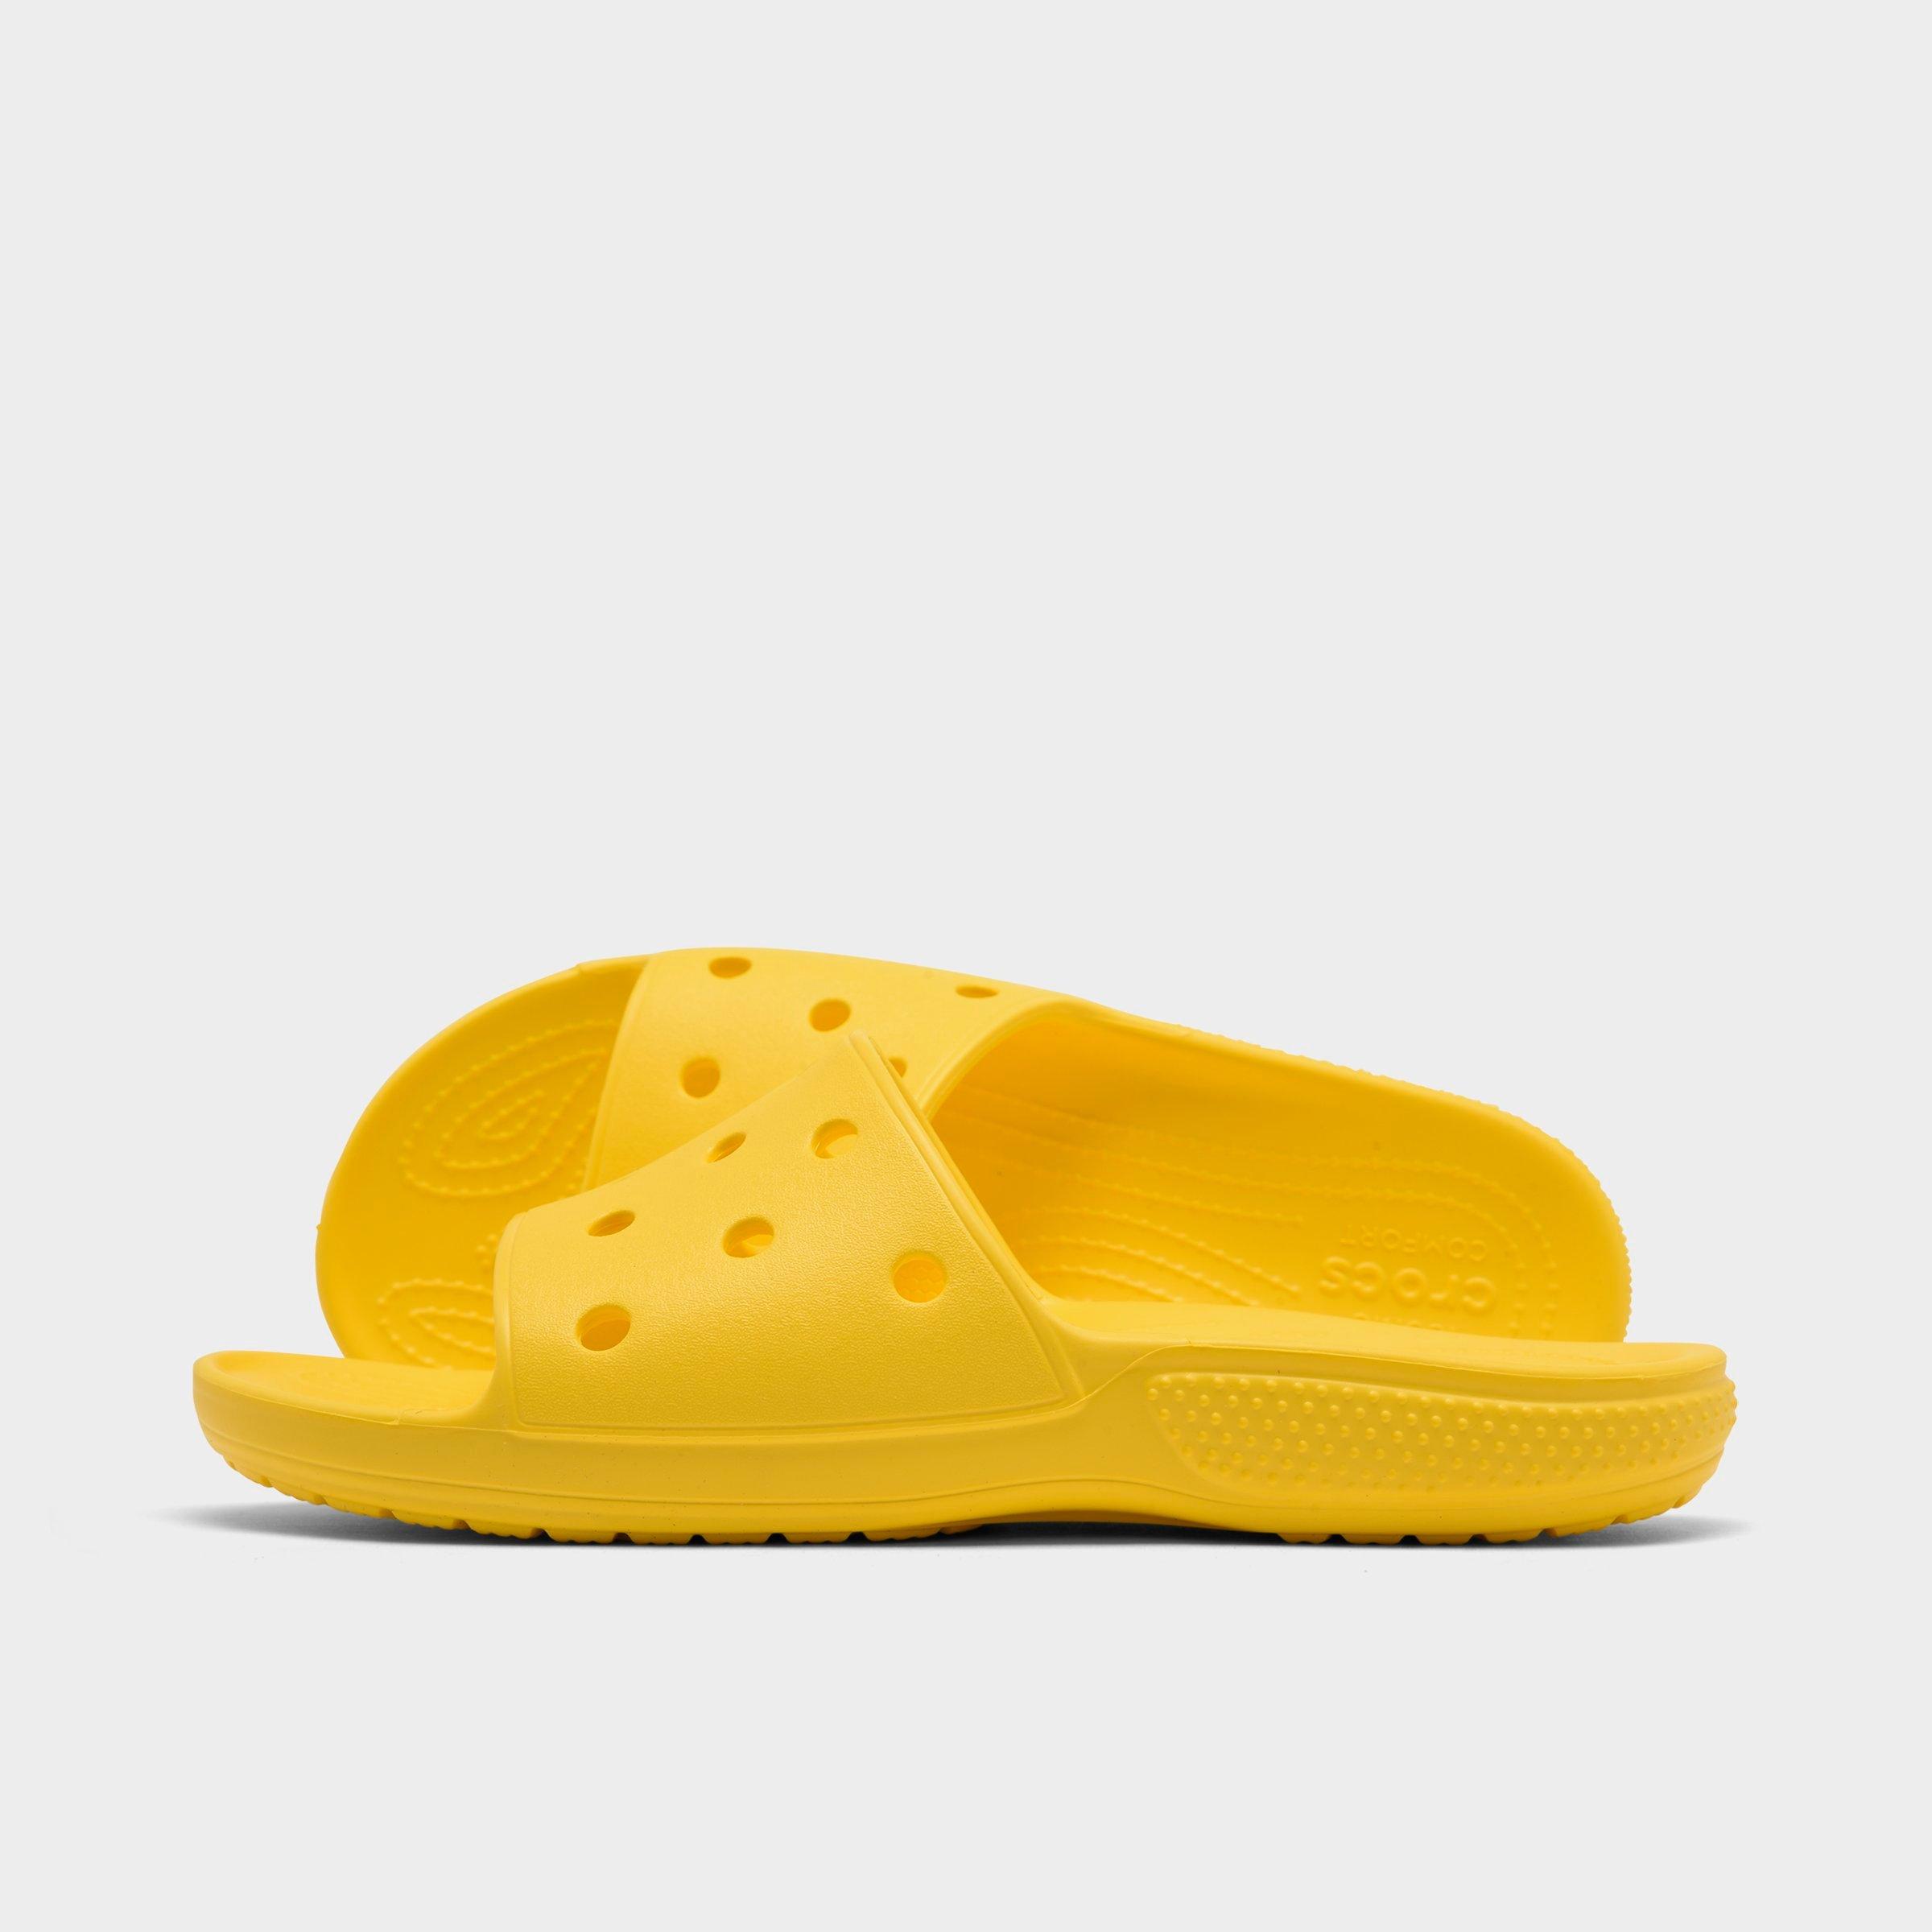 yellow croc sandals